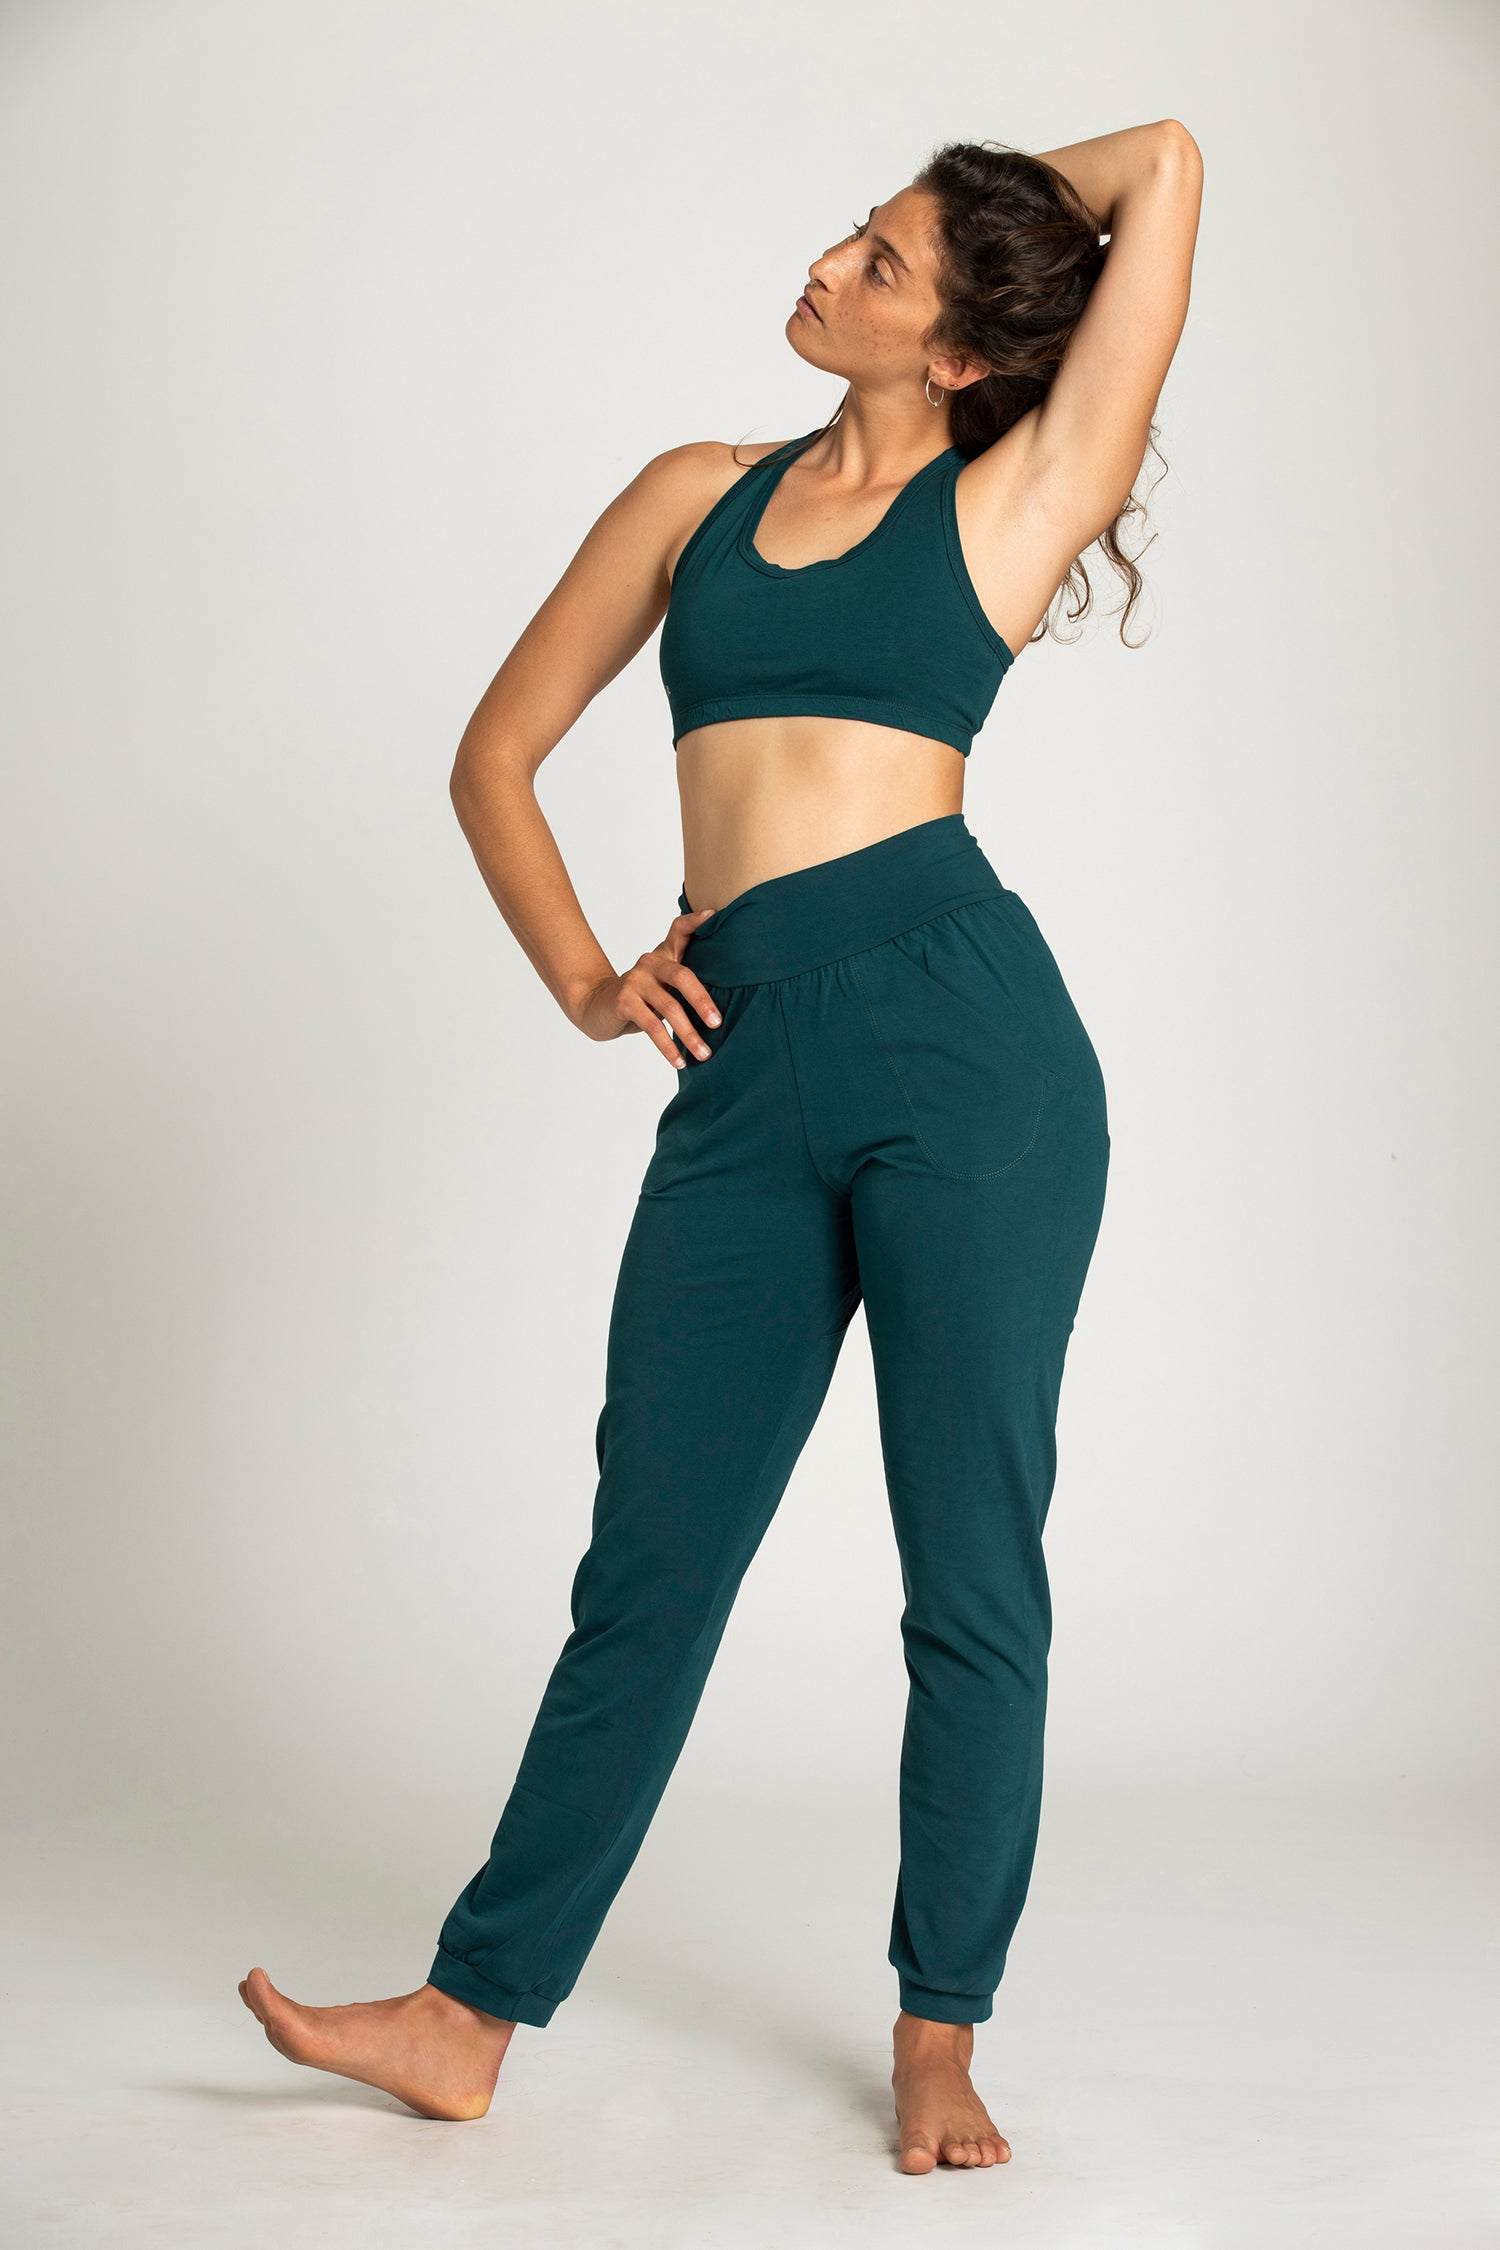 RYDCOT Workout Pants for Women High Waist Elasticity Yoga Pants